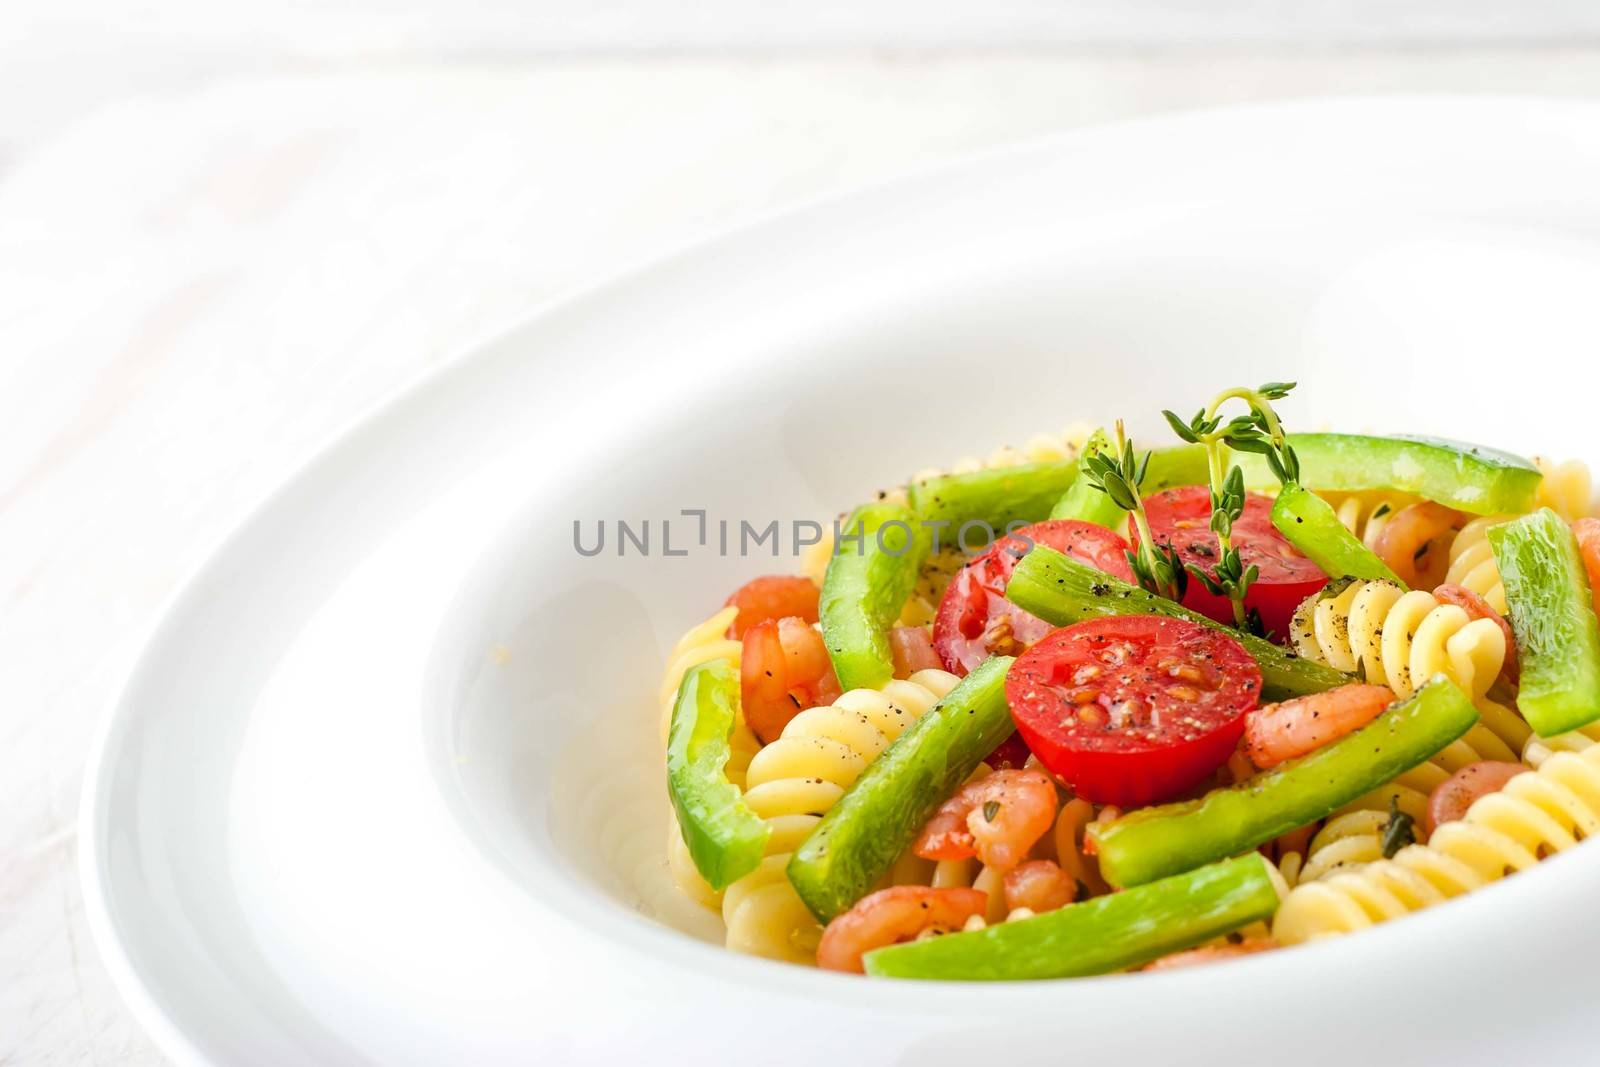 Pasta with vegetables and shrimps by Deniskarpenkov